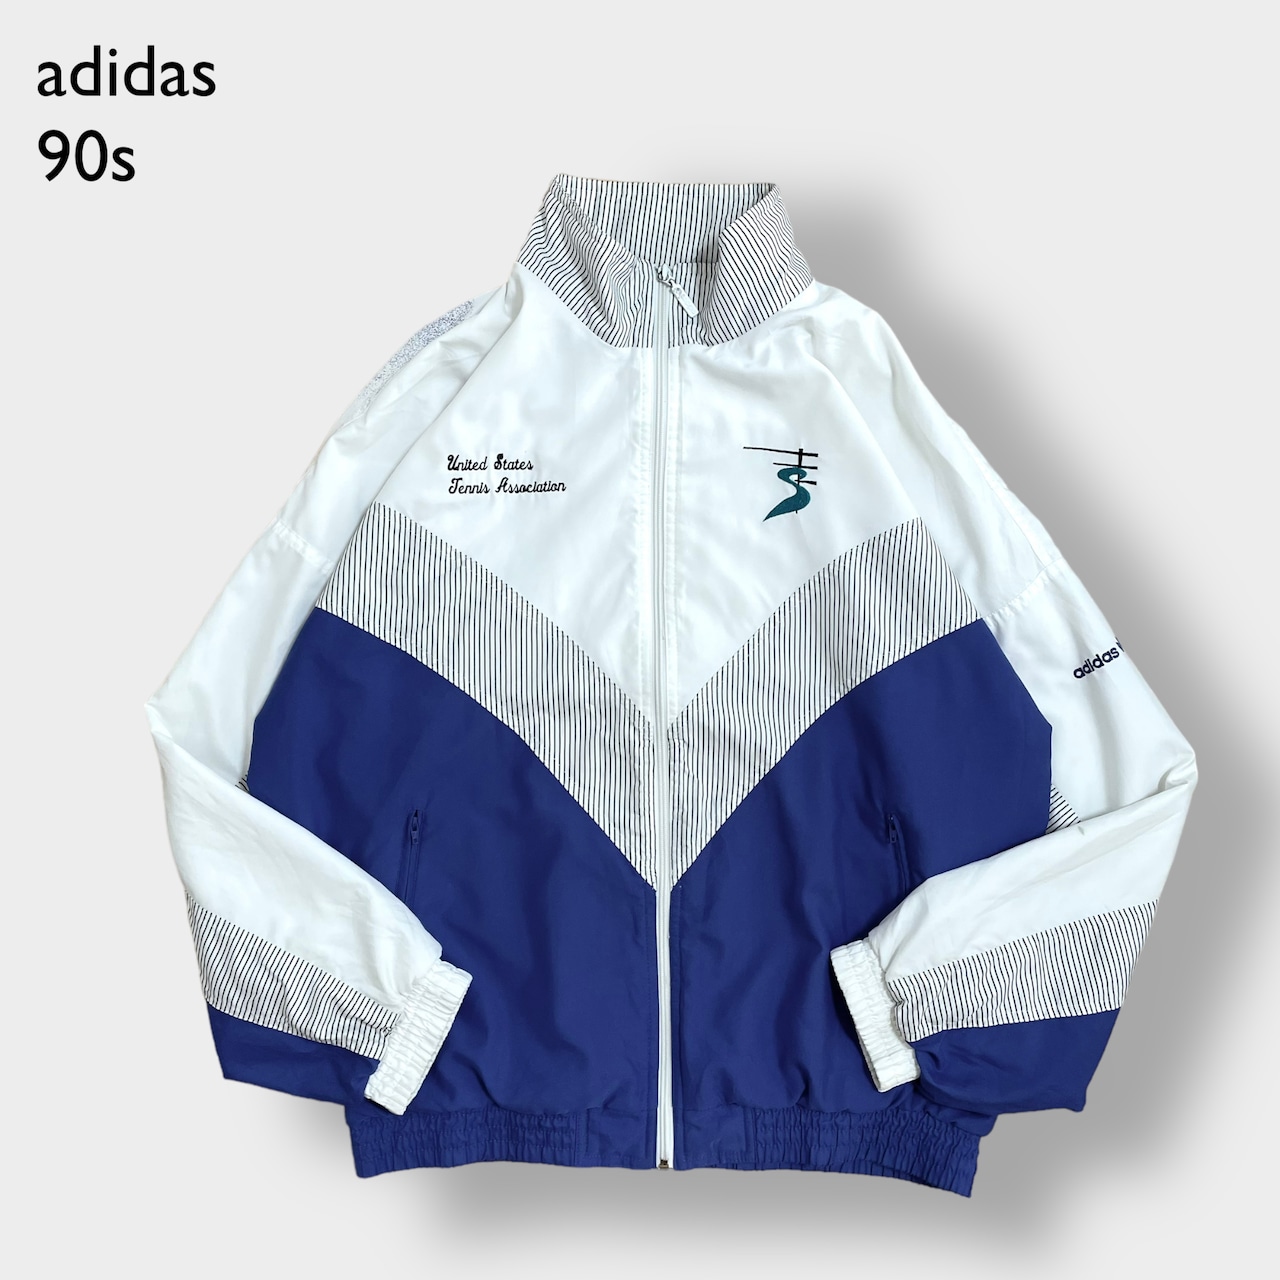 【adidas】90s トラックジャケット ジャンパー ブルゾン 刺繍ロゴ フルジップ バックプリント 切替 銀タグ 万国旗タグ アディダス US古着